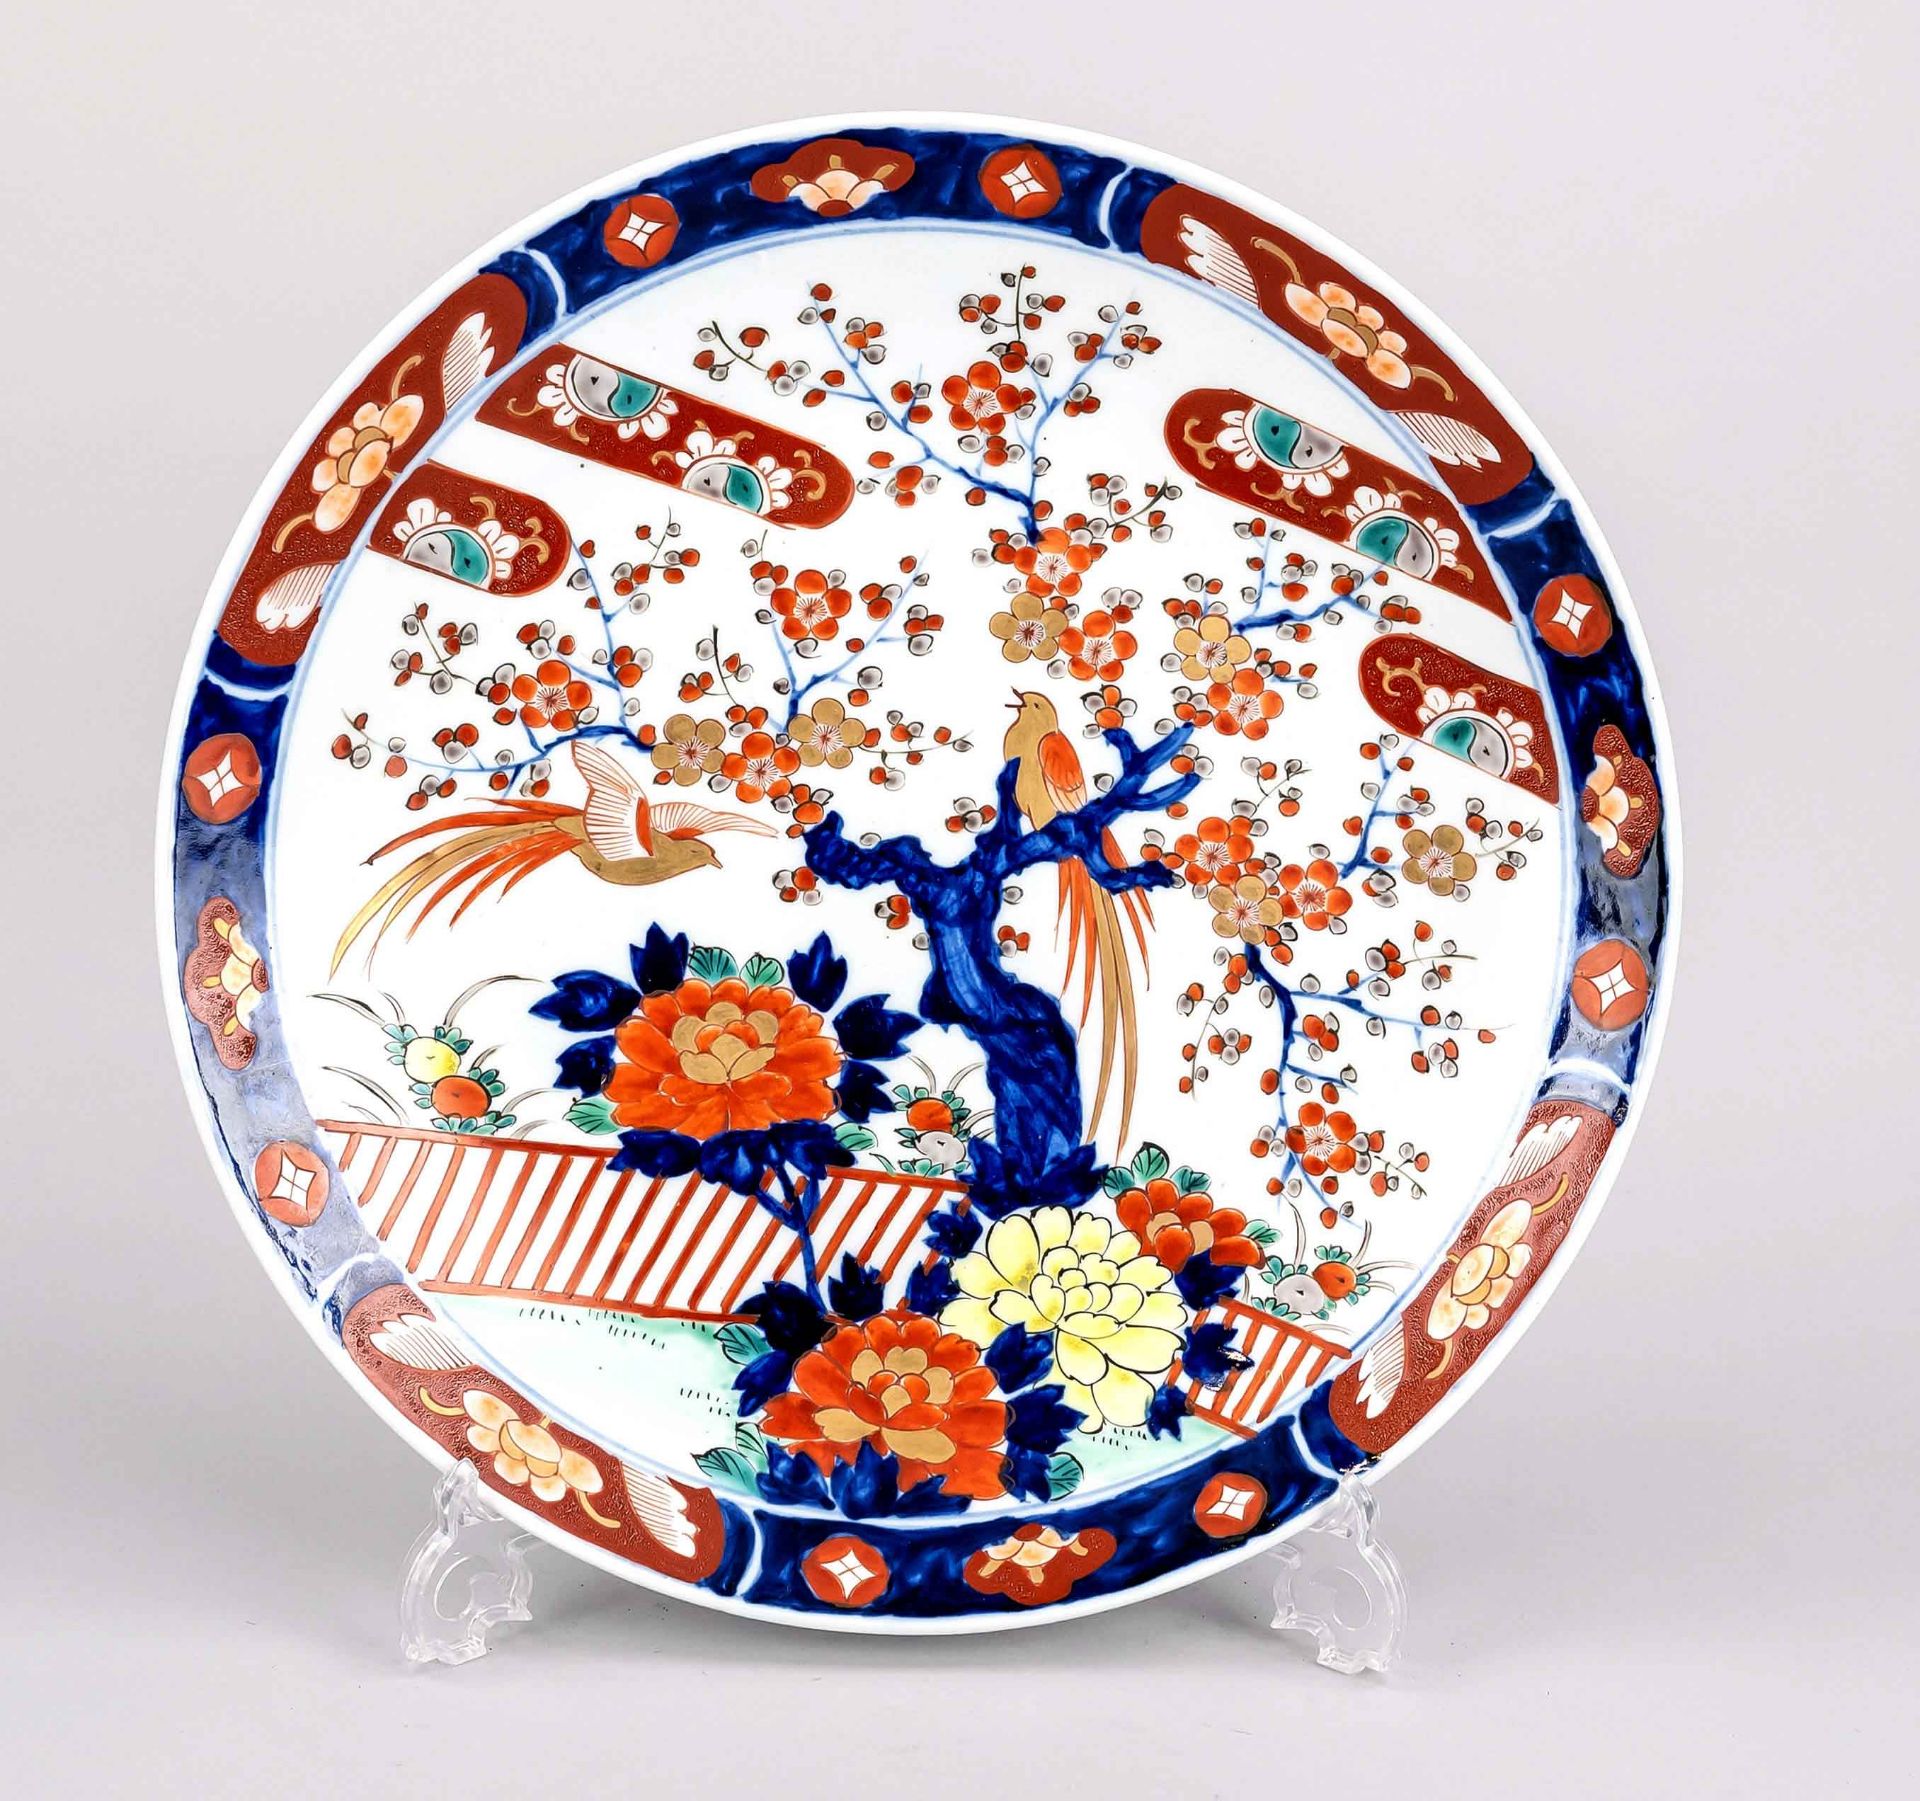 Large imari plate, Japan, Arita, Taisho period(1912-1926), porcelain with polychrome glaze